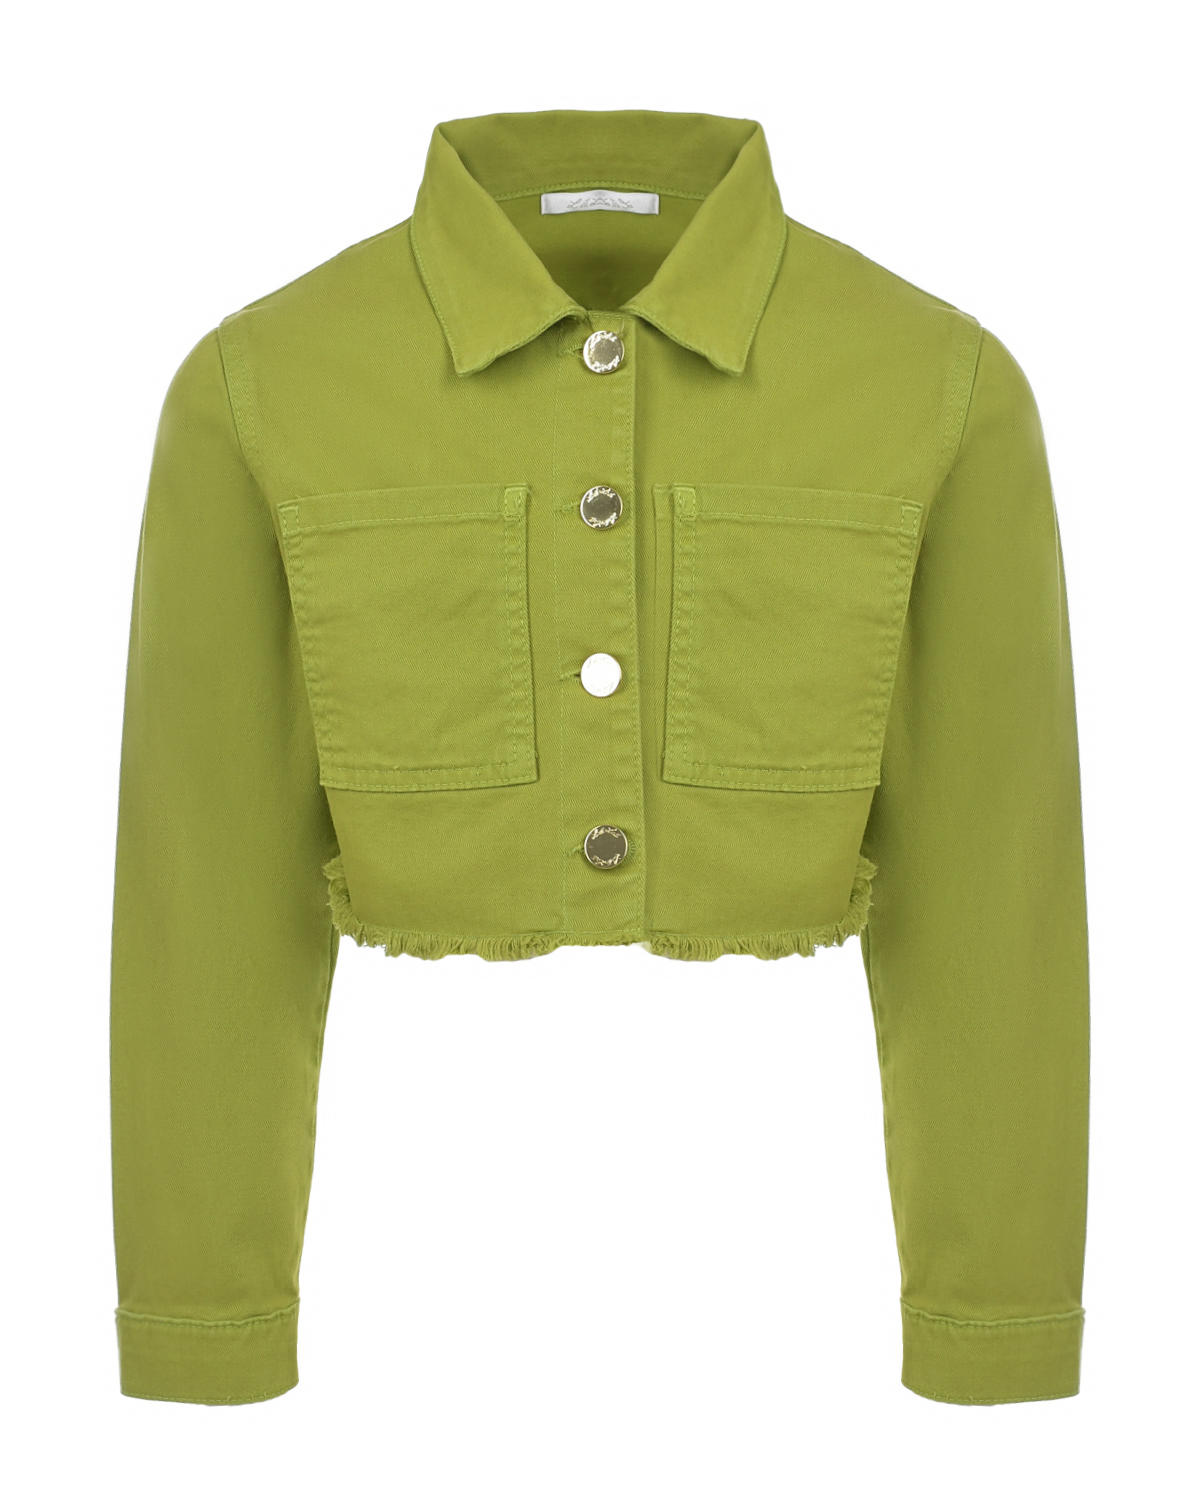 Джинсовая куртка зеленого цвета Miss Grant, размер 128